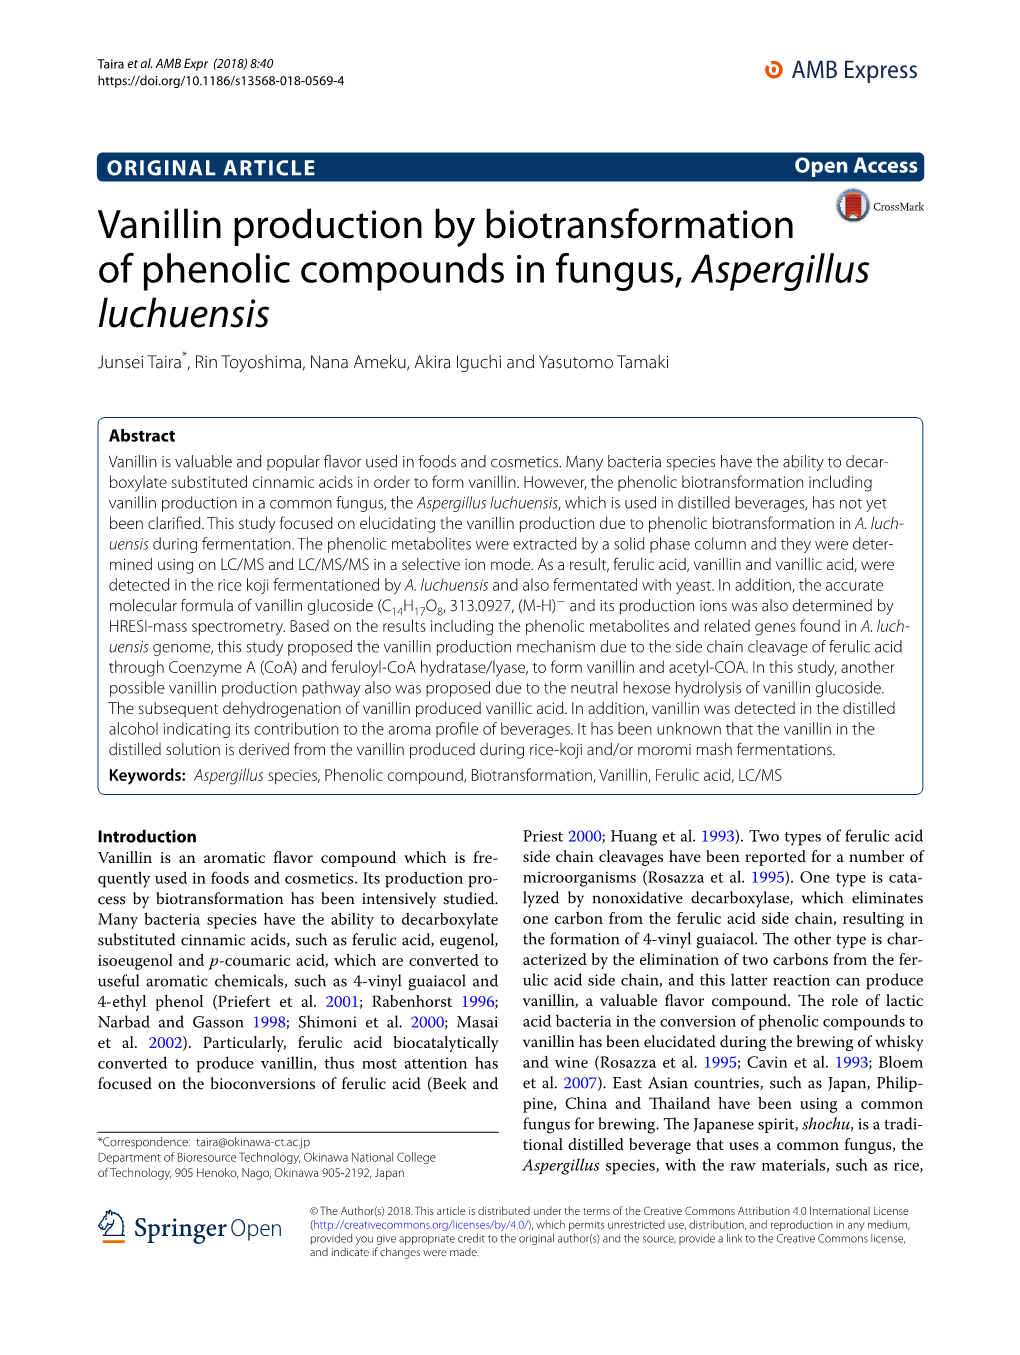 Vanillin Production by Biotransformation of Phenolic